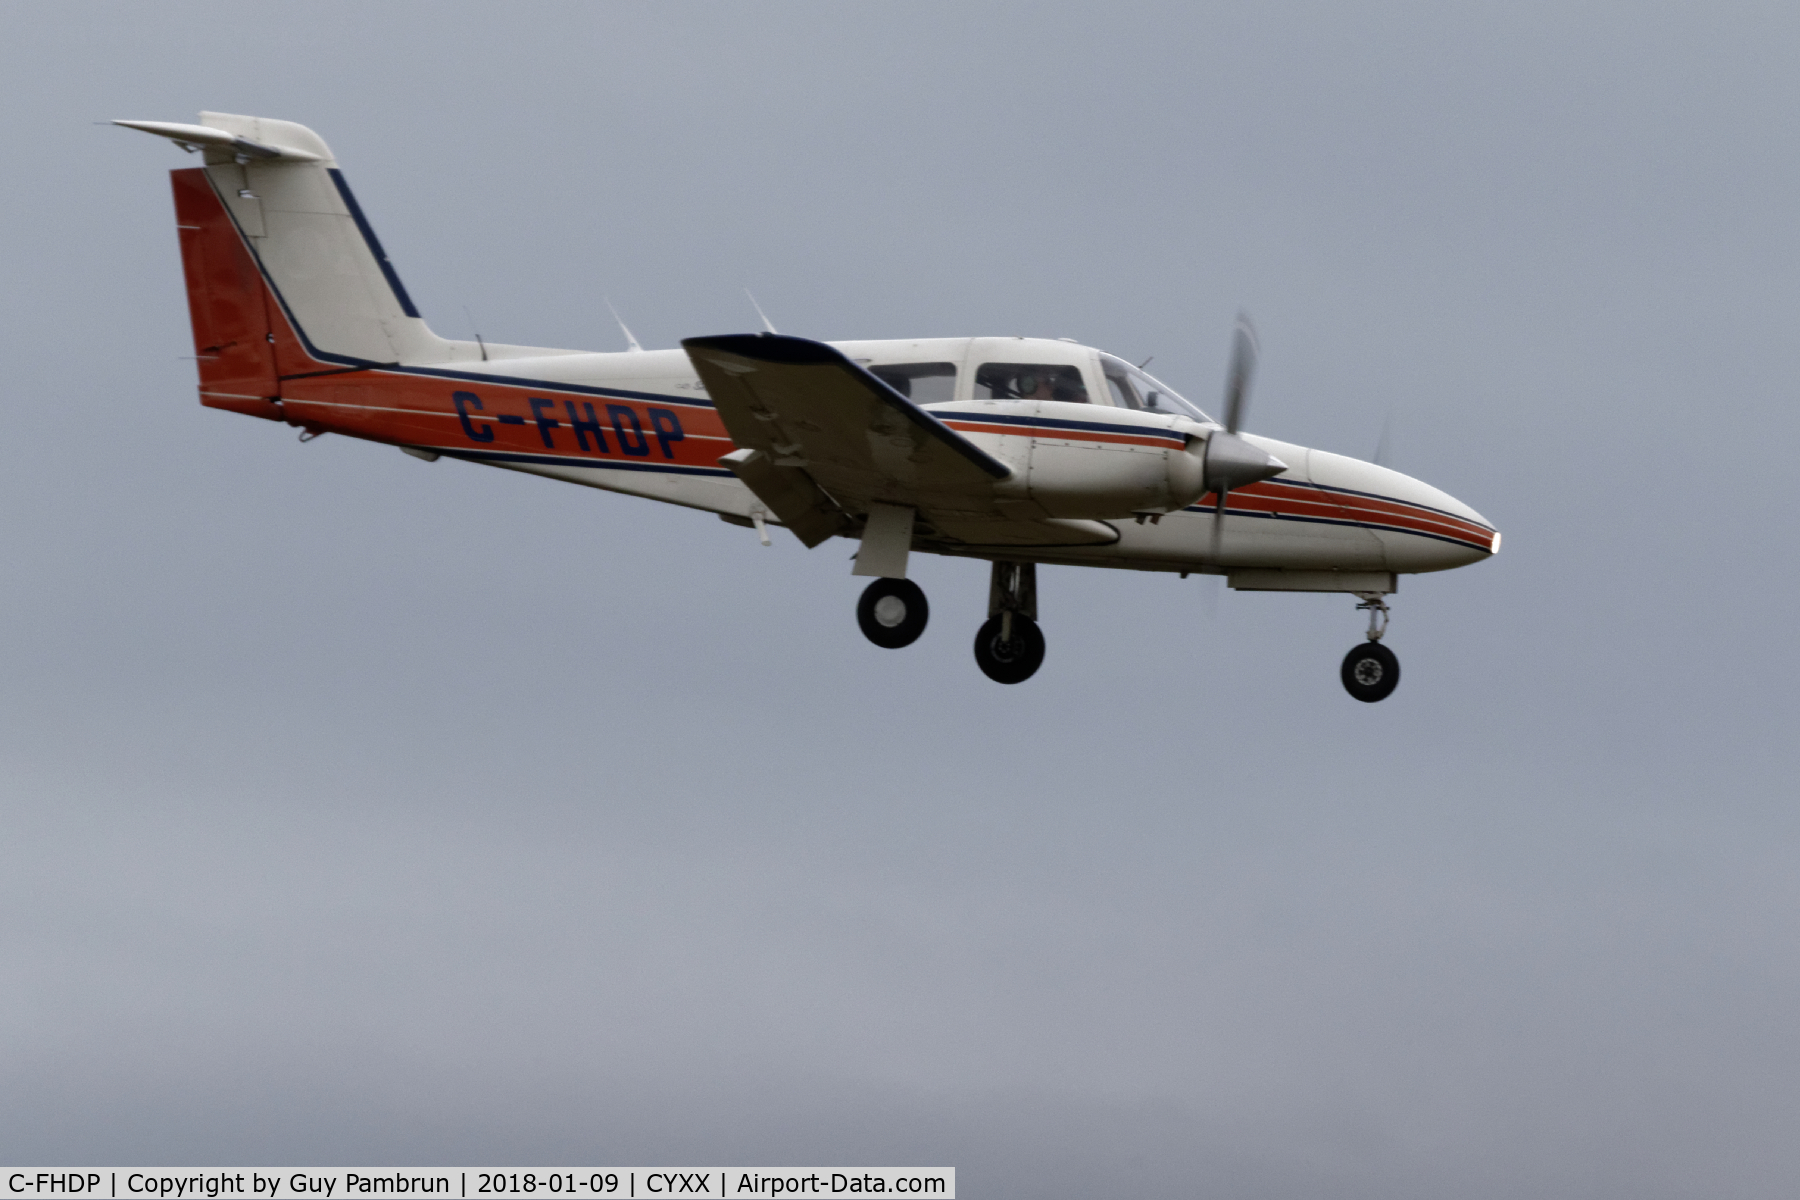 C-FHDP, 1980 Piper PA-44-180 Seminole C/N 44-8095022, Landing